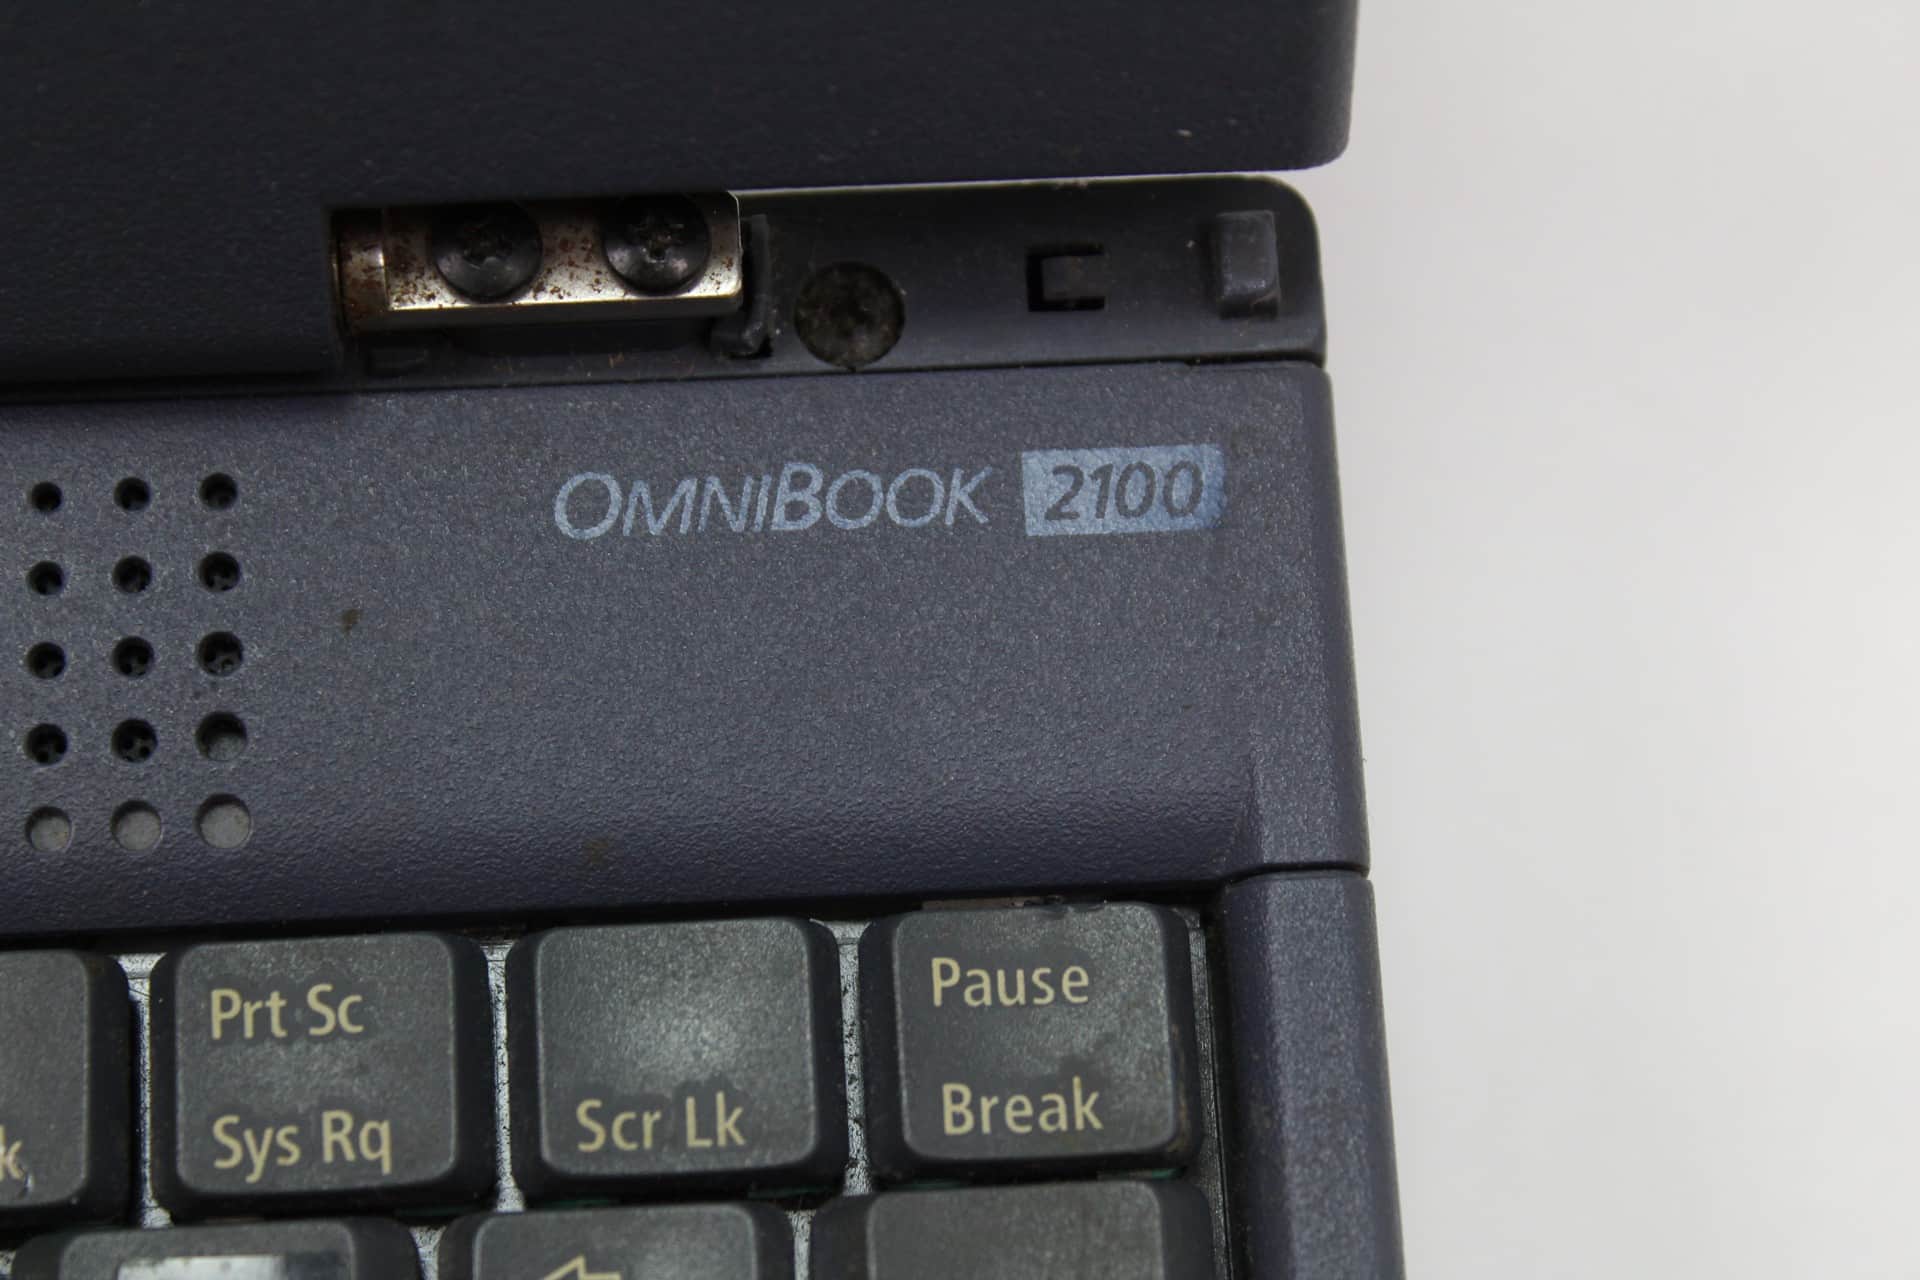 Hewlett Packard OmniBook 2100 - Model